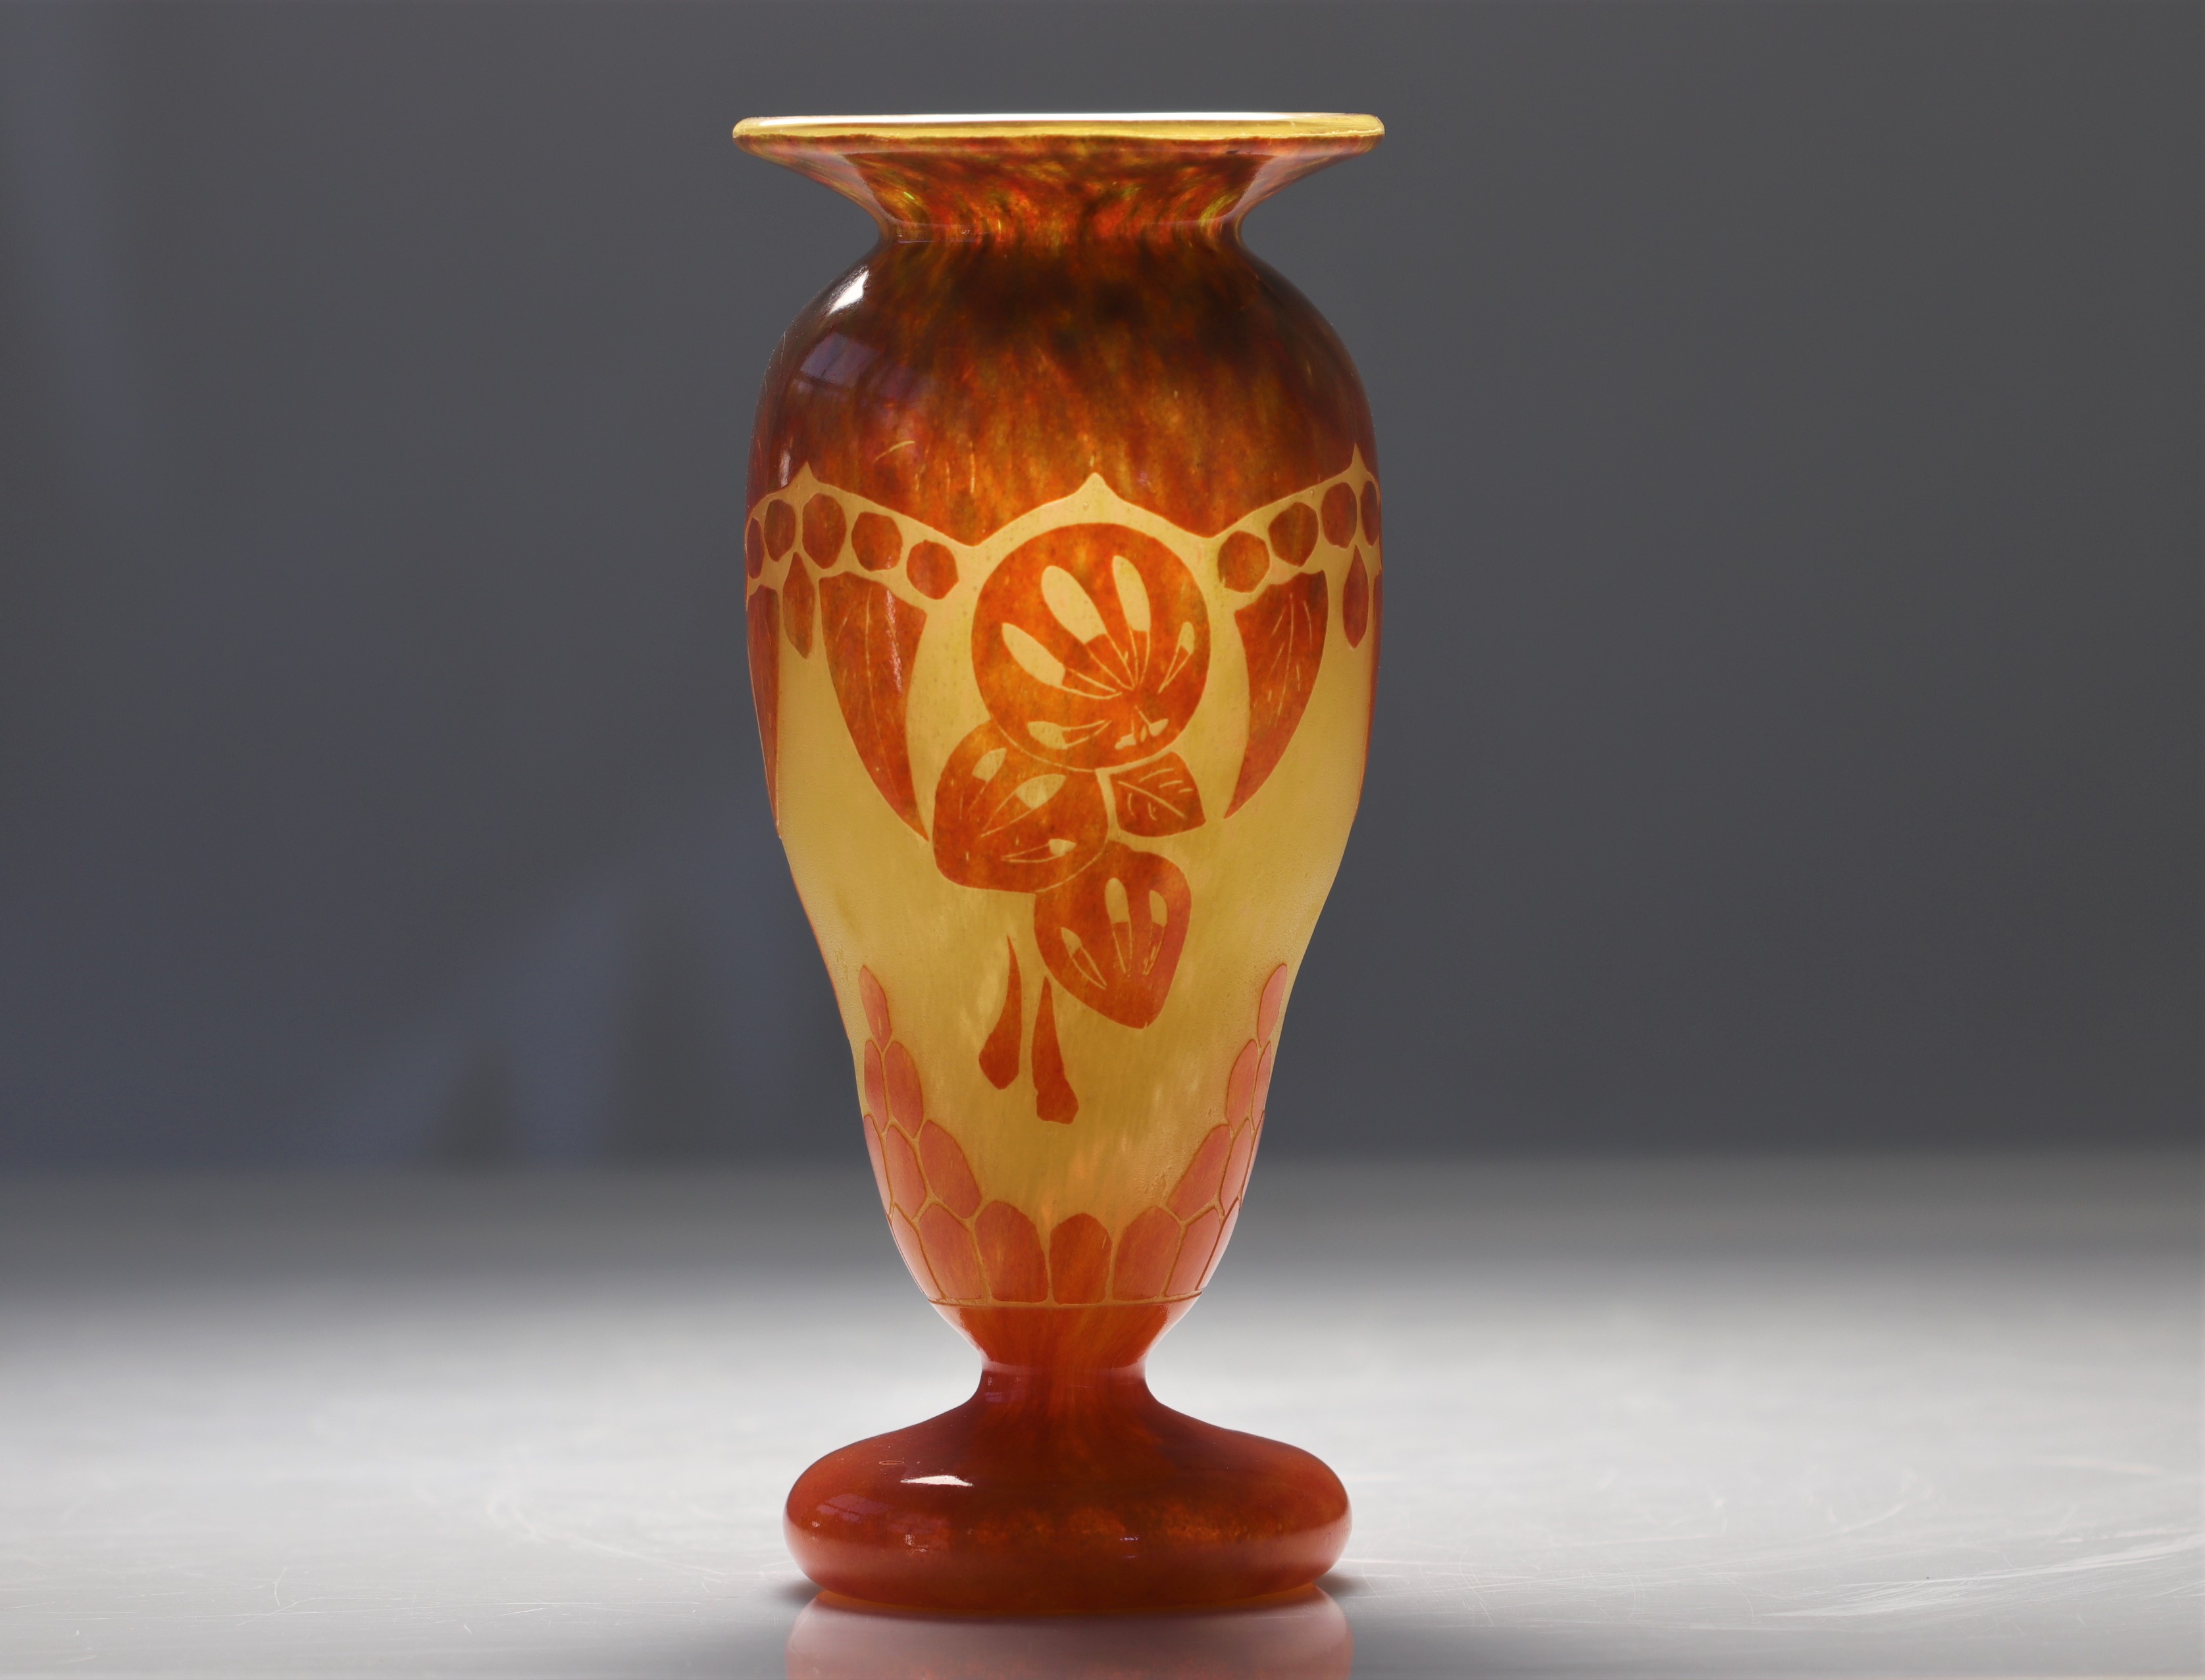 Le Verre Francais acid-etched vase with daffodil design